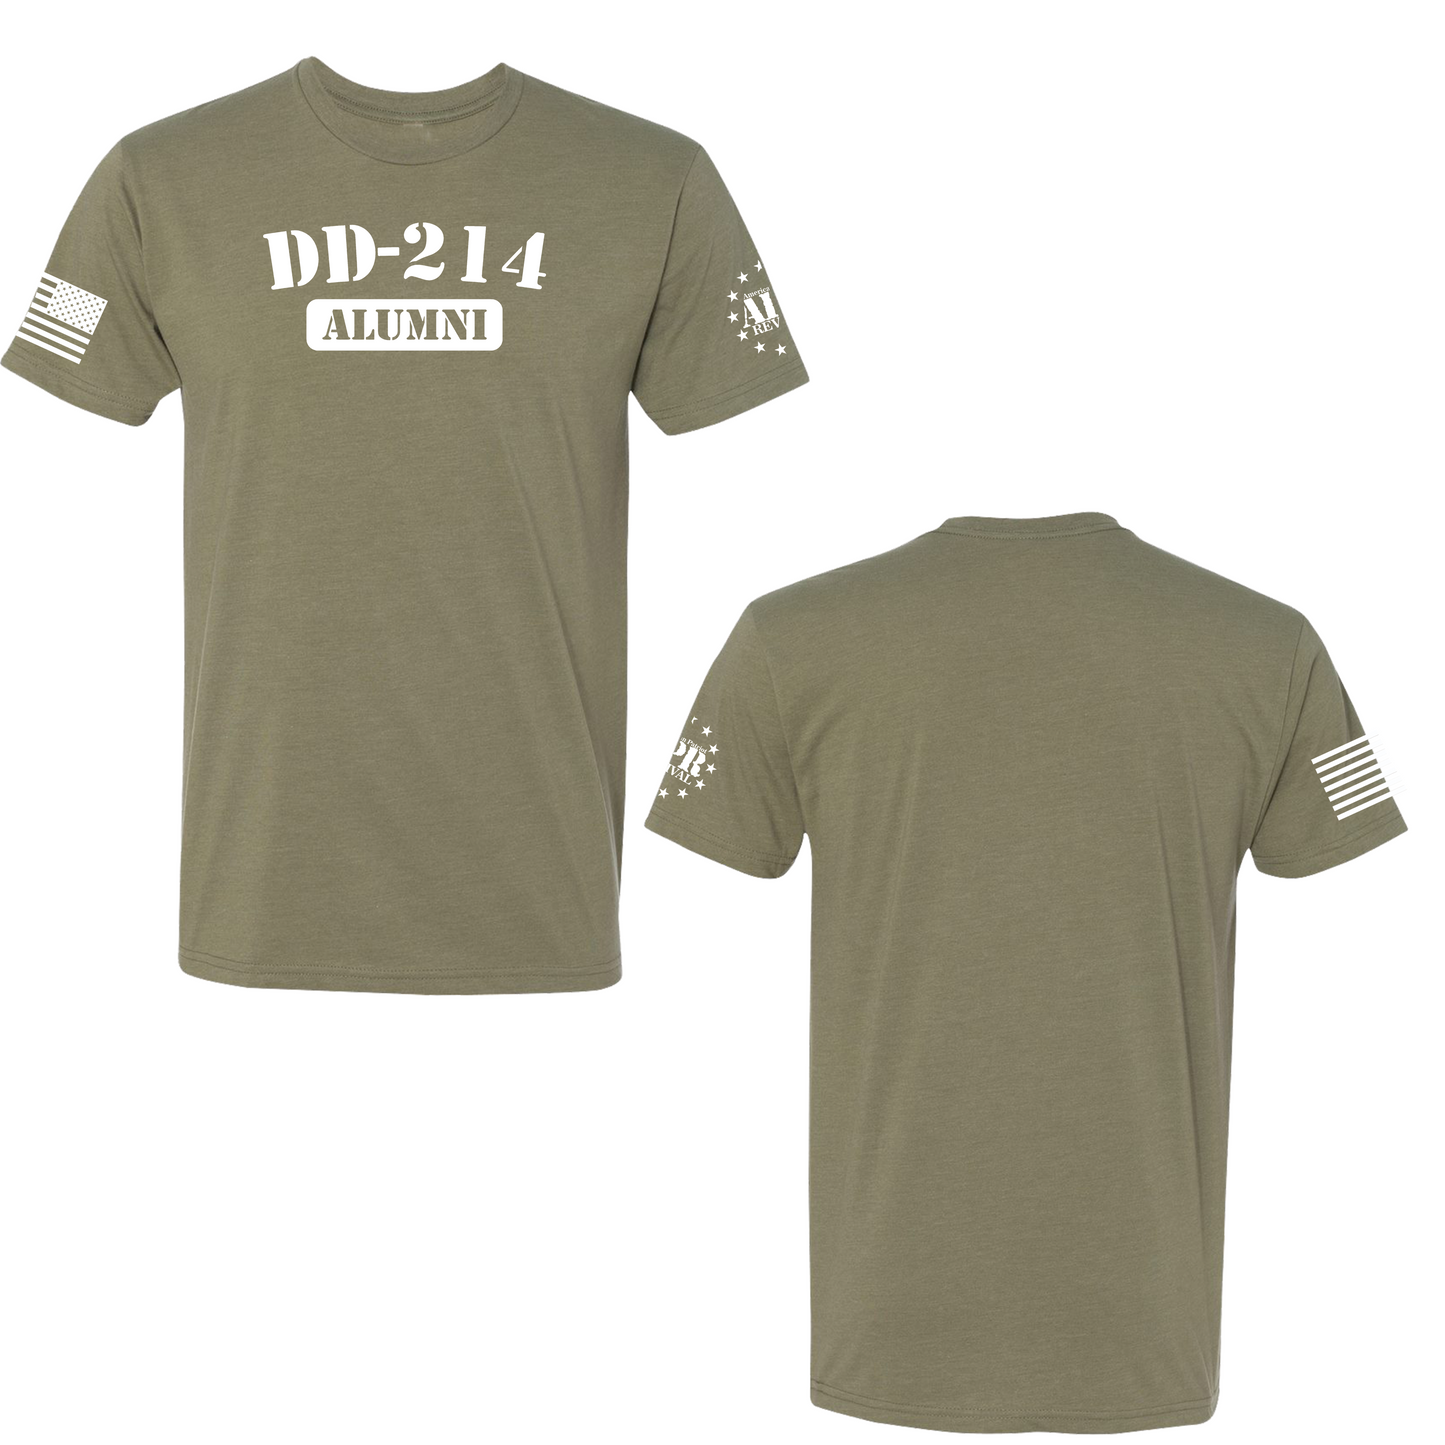 DD-214 Alumni Tee Shirt - Premium  from American Patriot Revival - Just $24.99! Shop now at American Patriot RevivalDD-214 Alumni Tee Shirt